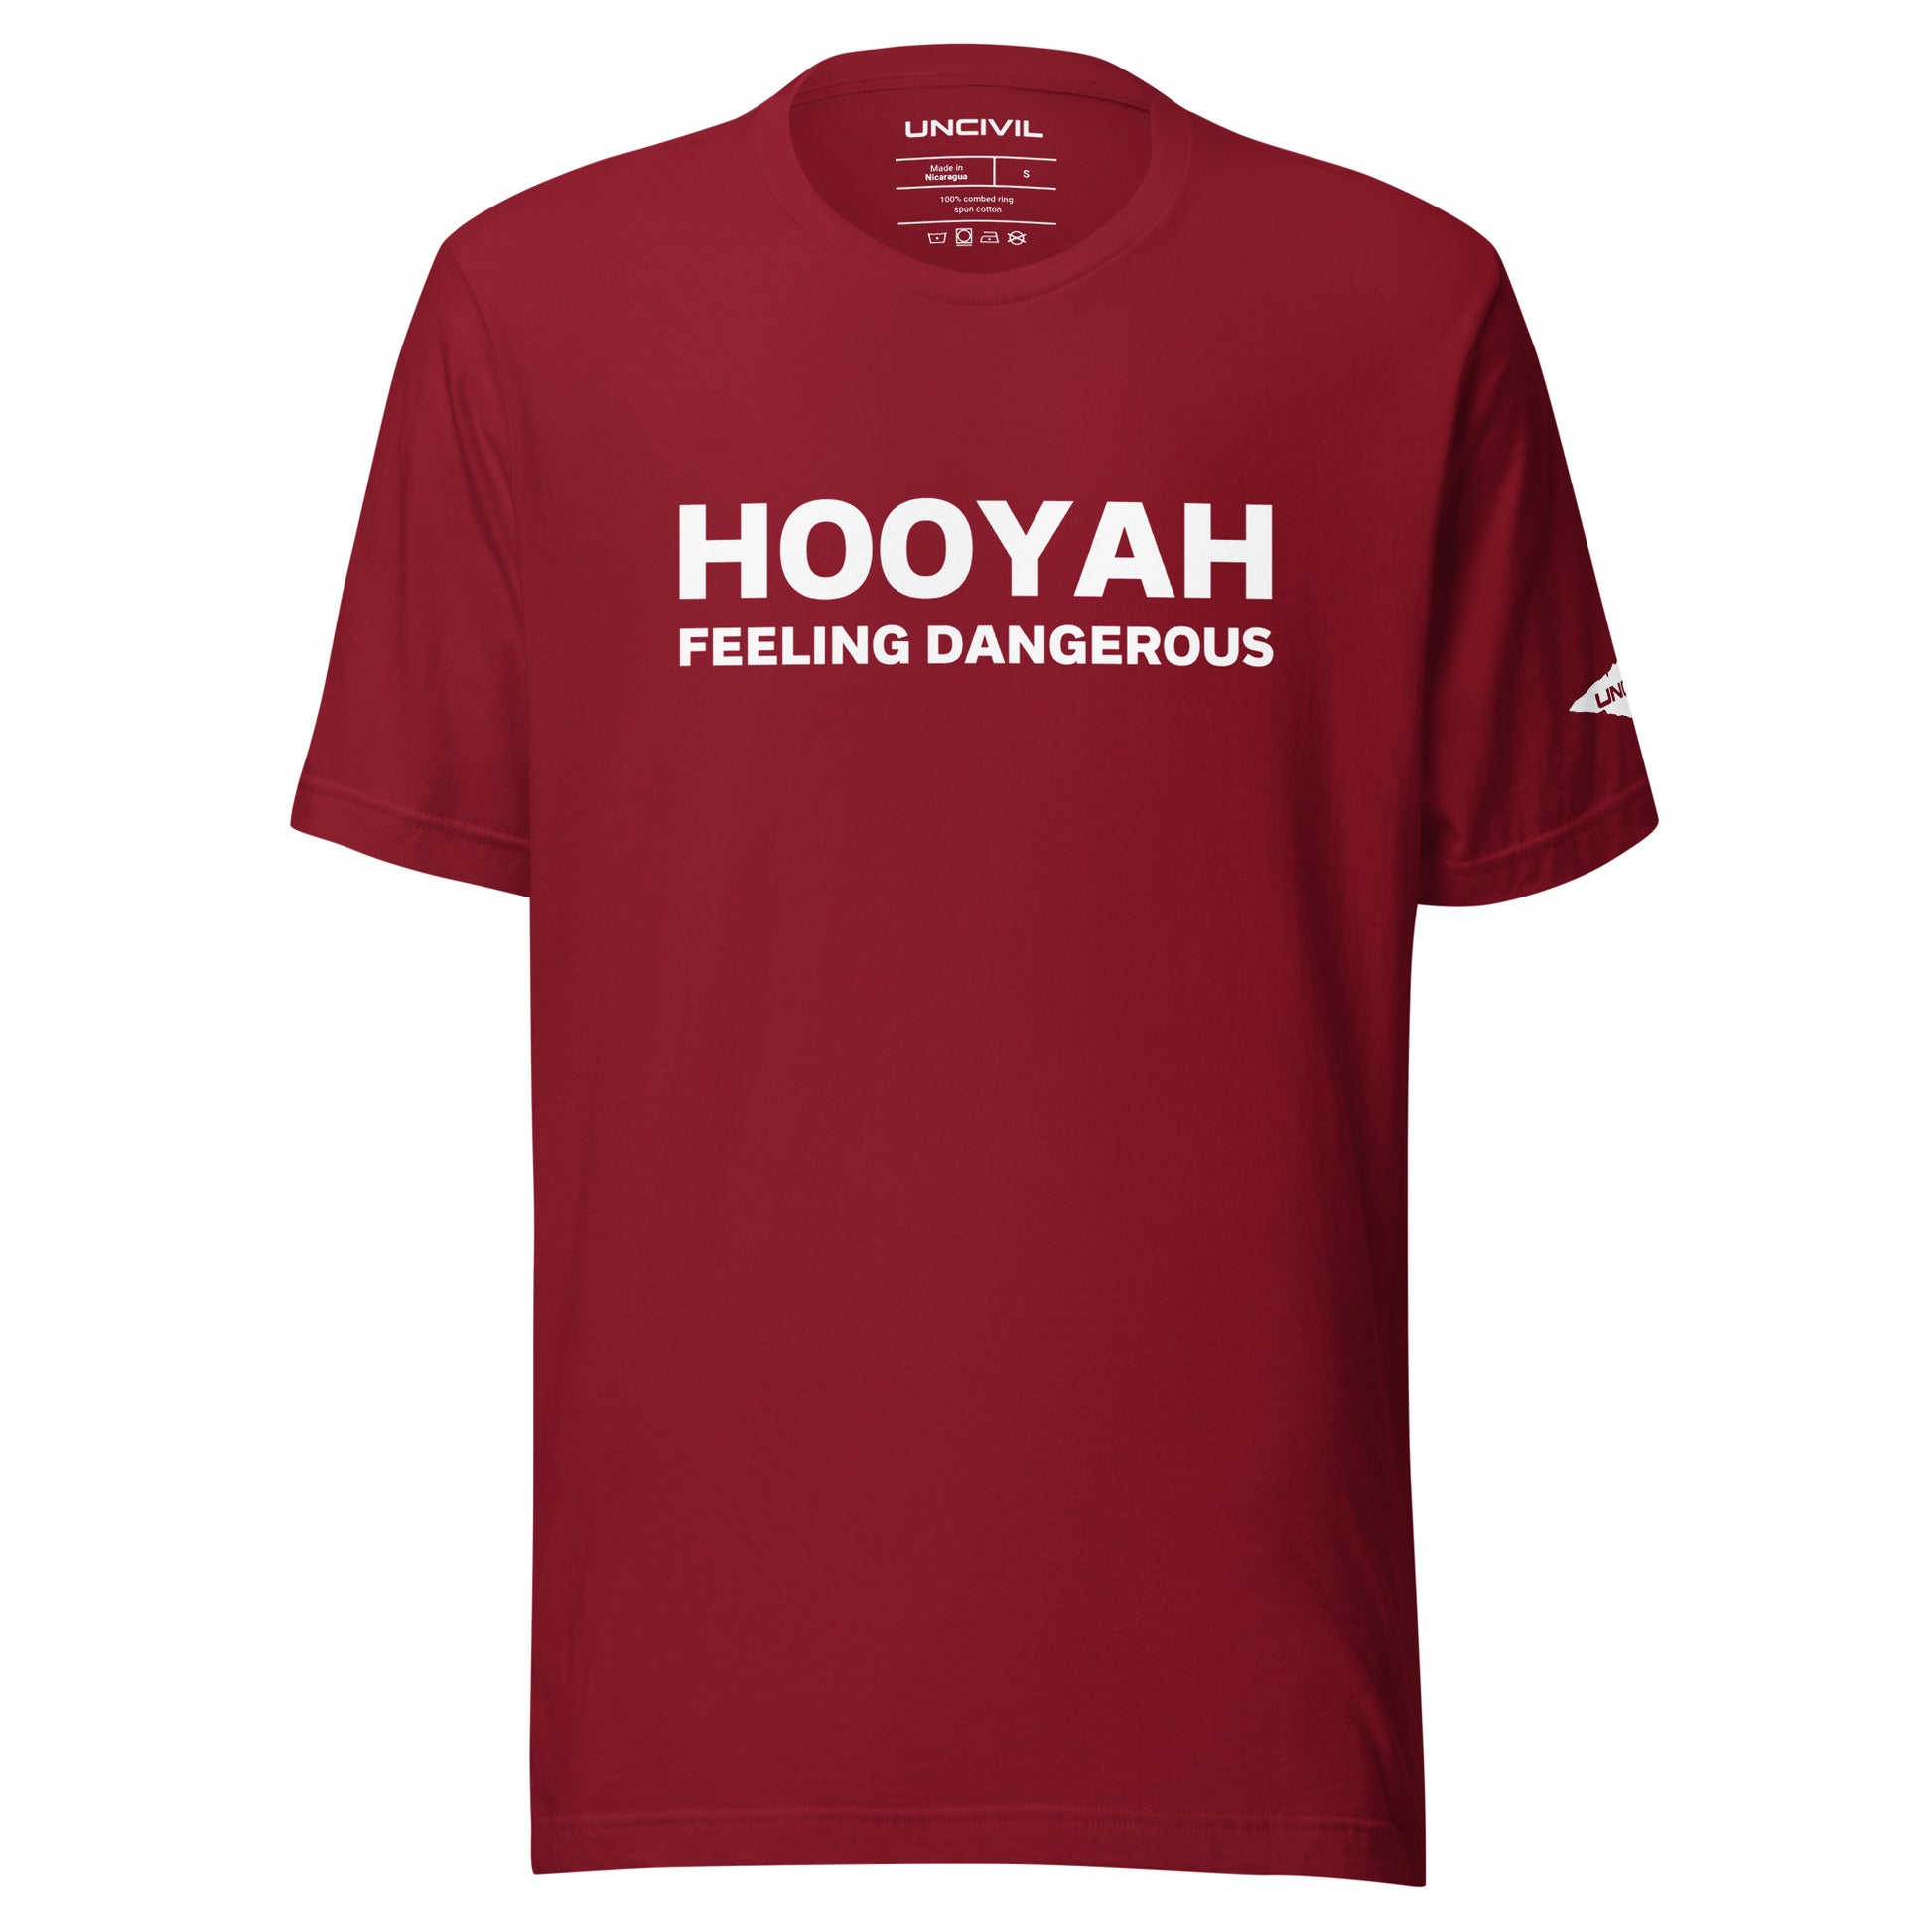 Hooyah, Feeling Dangerous shirt. The term "hooyah" is a U.S. Navy SEALs battle cry often used as motivation. Red unisex t-shirt.